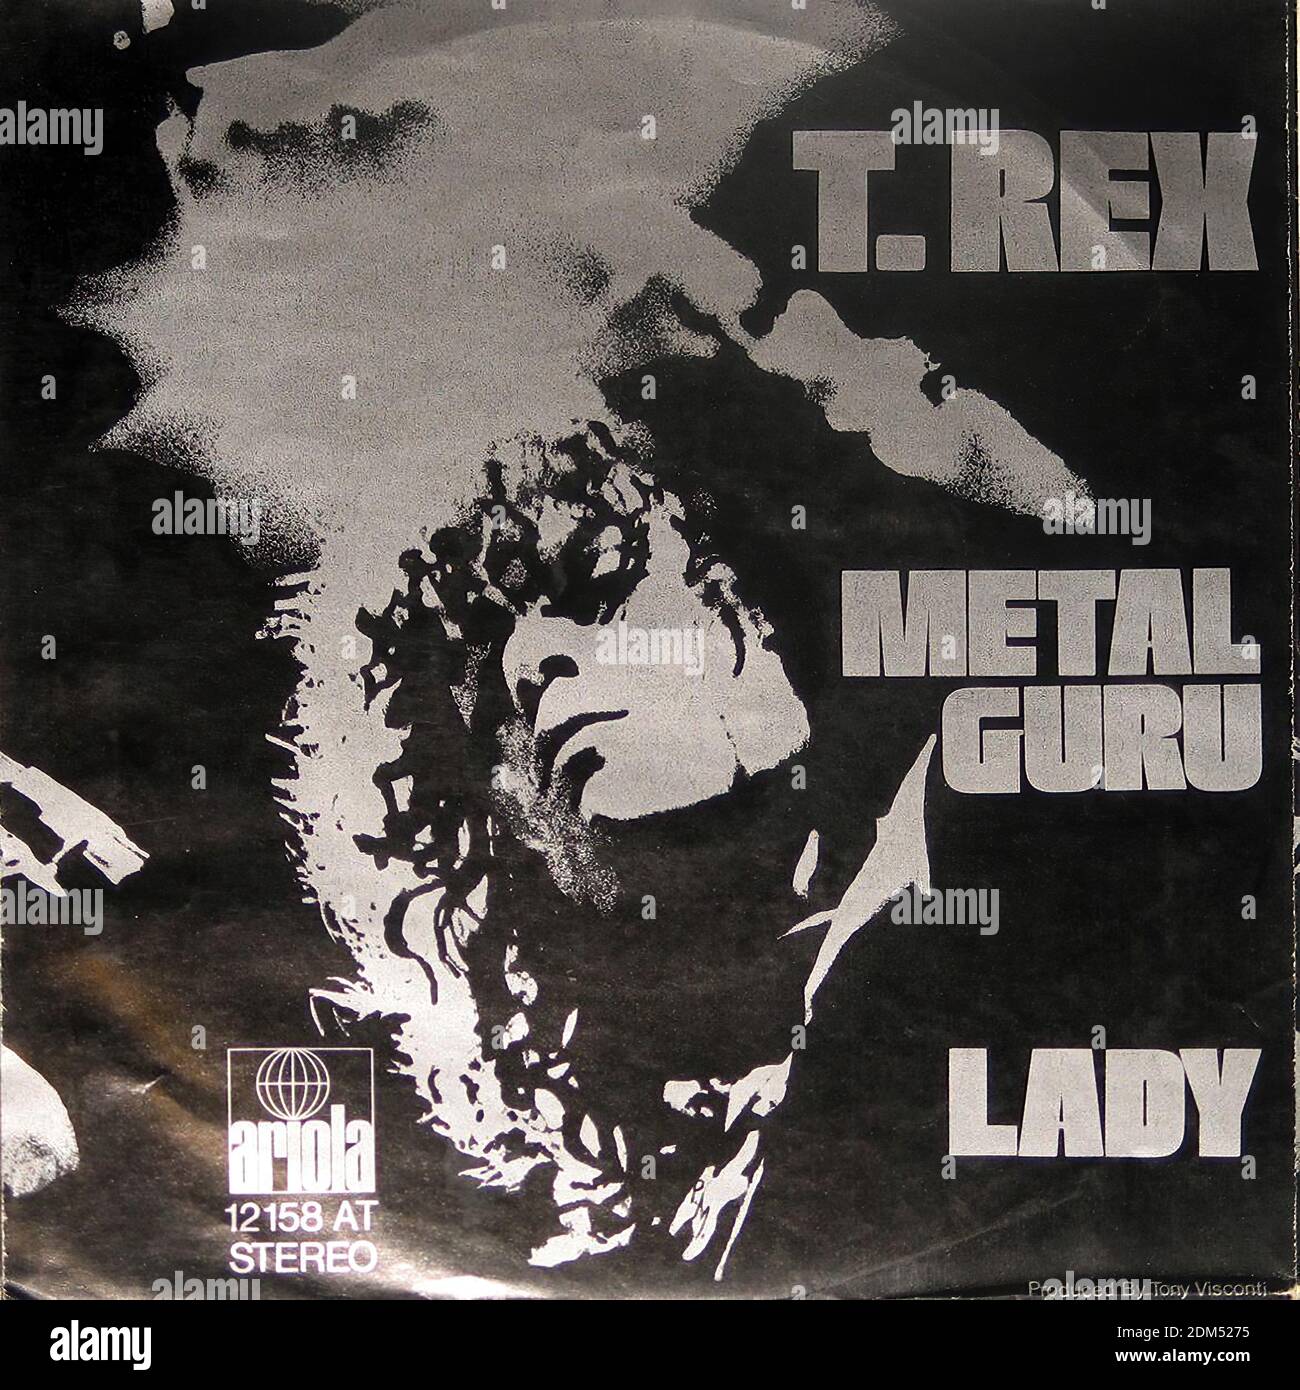 T.REX Metal Guru Lady Tyrannosaurus Rex - Vintage Vinyl Registrare la  copertina Foto stock - Alamy